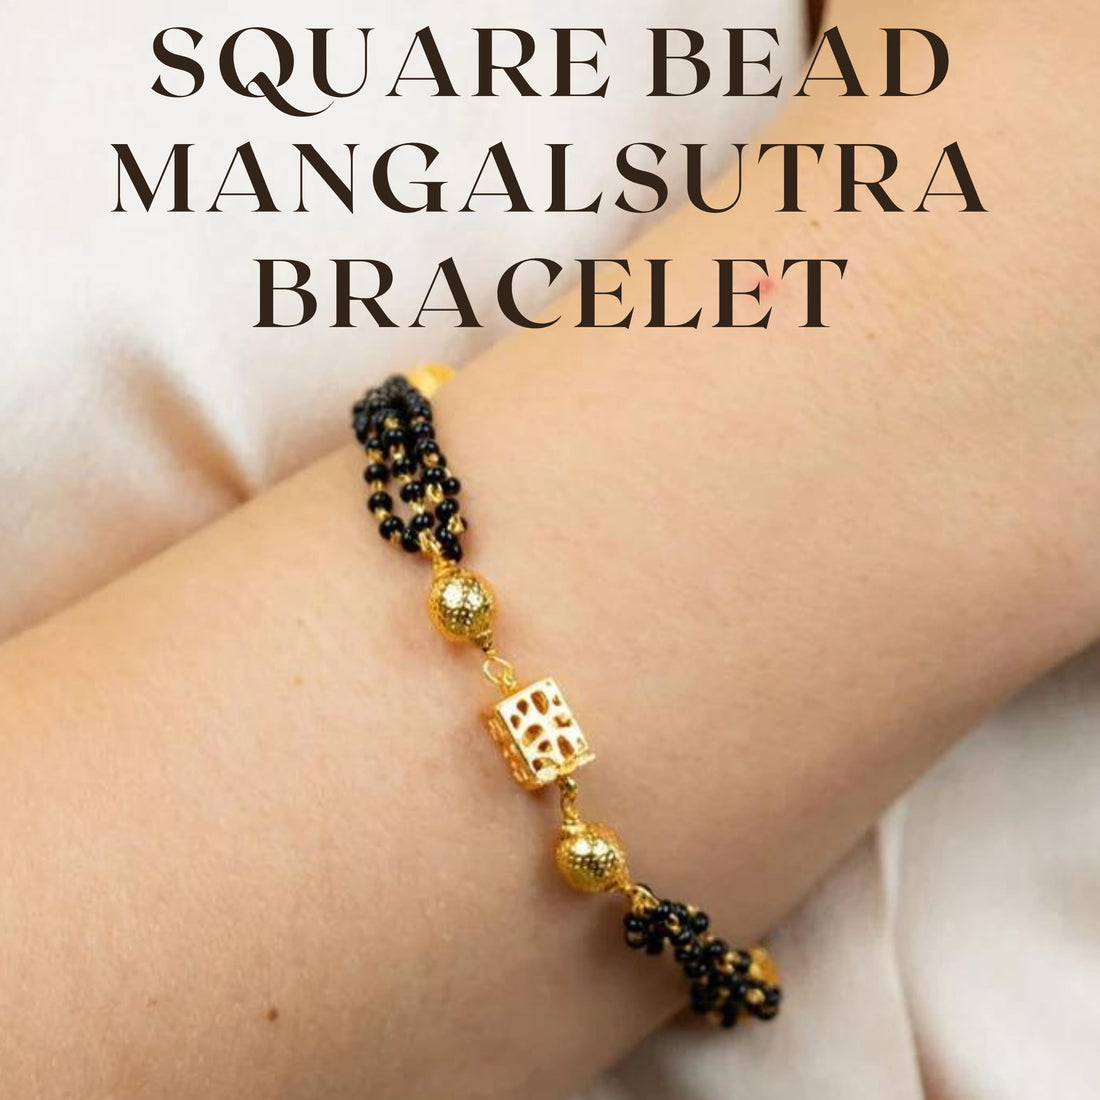 Square Bead Mangalsutra Bracelet